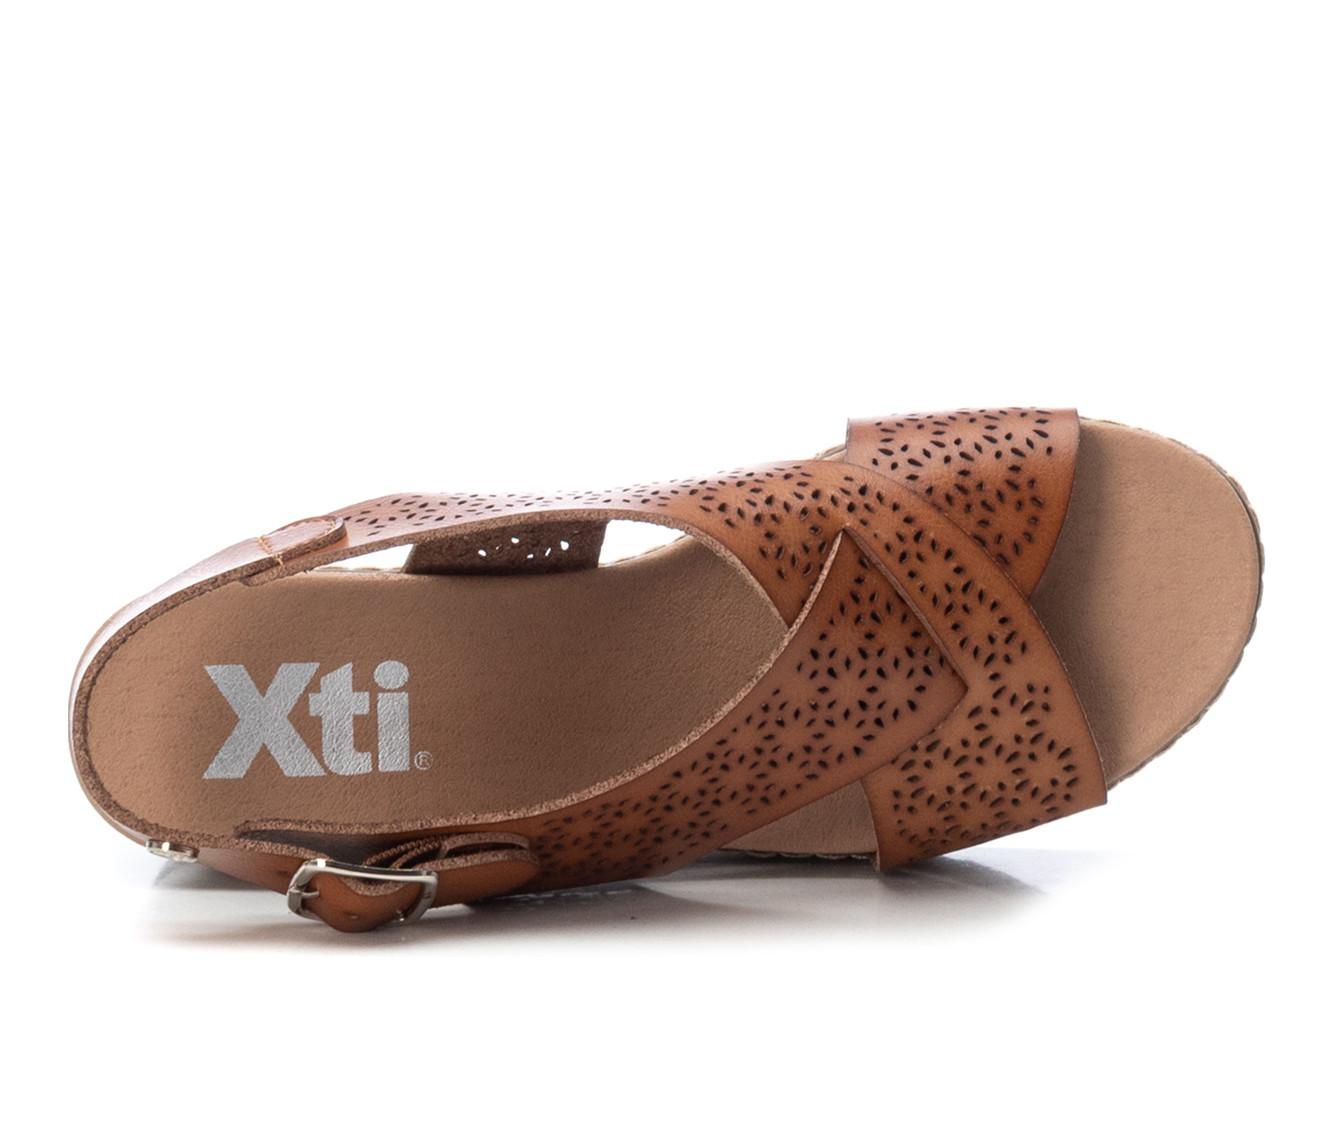 Women's Xti Quinn Platform Wedge Sandals